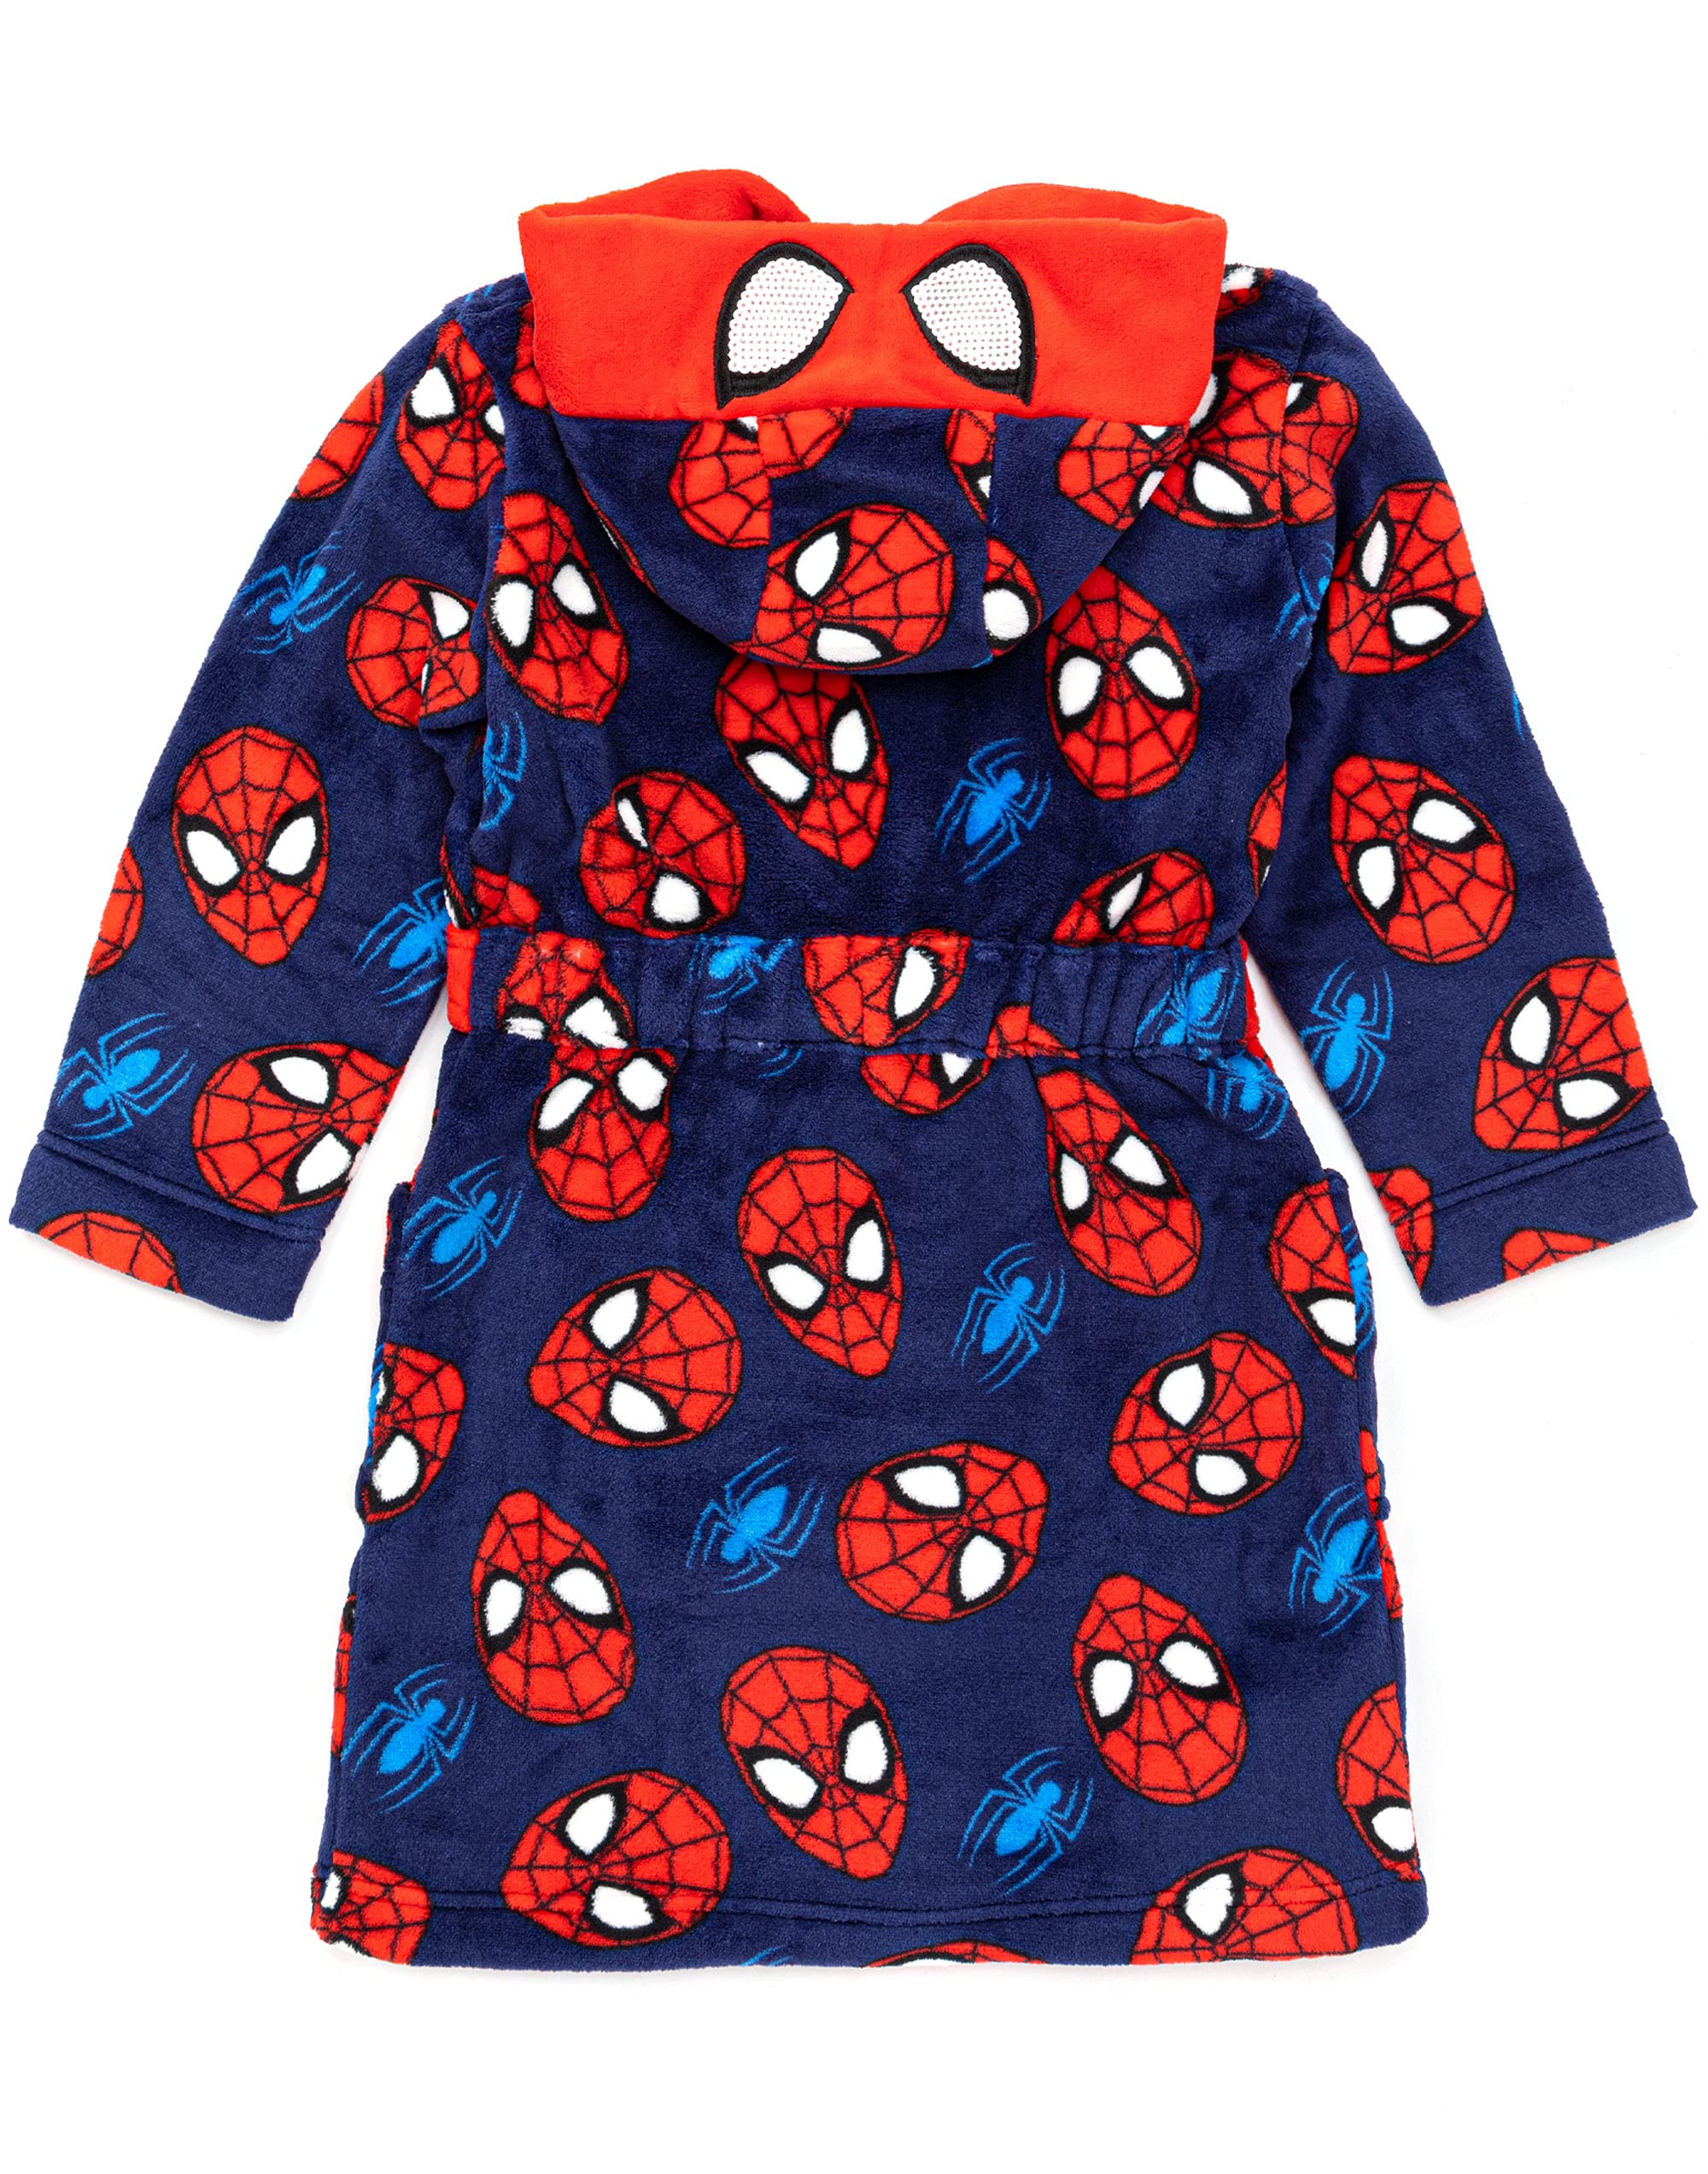 Marvel Spider-Man Dressing Gown Boys Kids Cosplay Pyjamas Robe